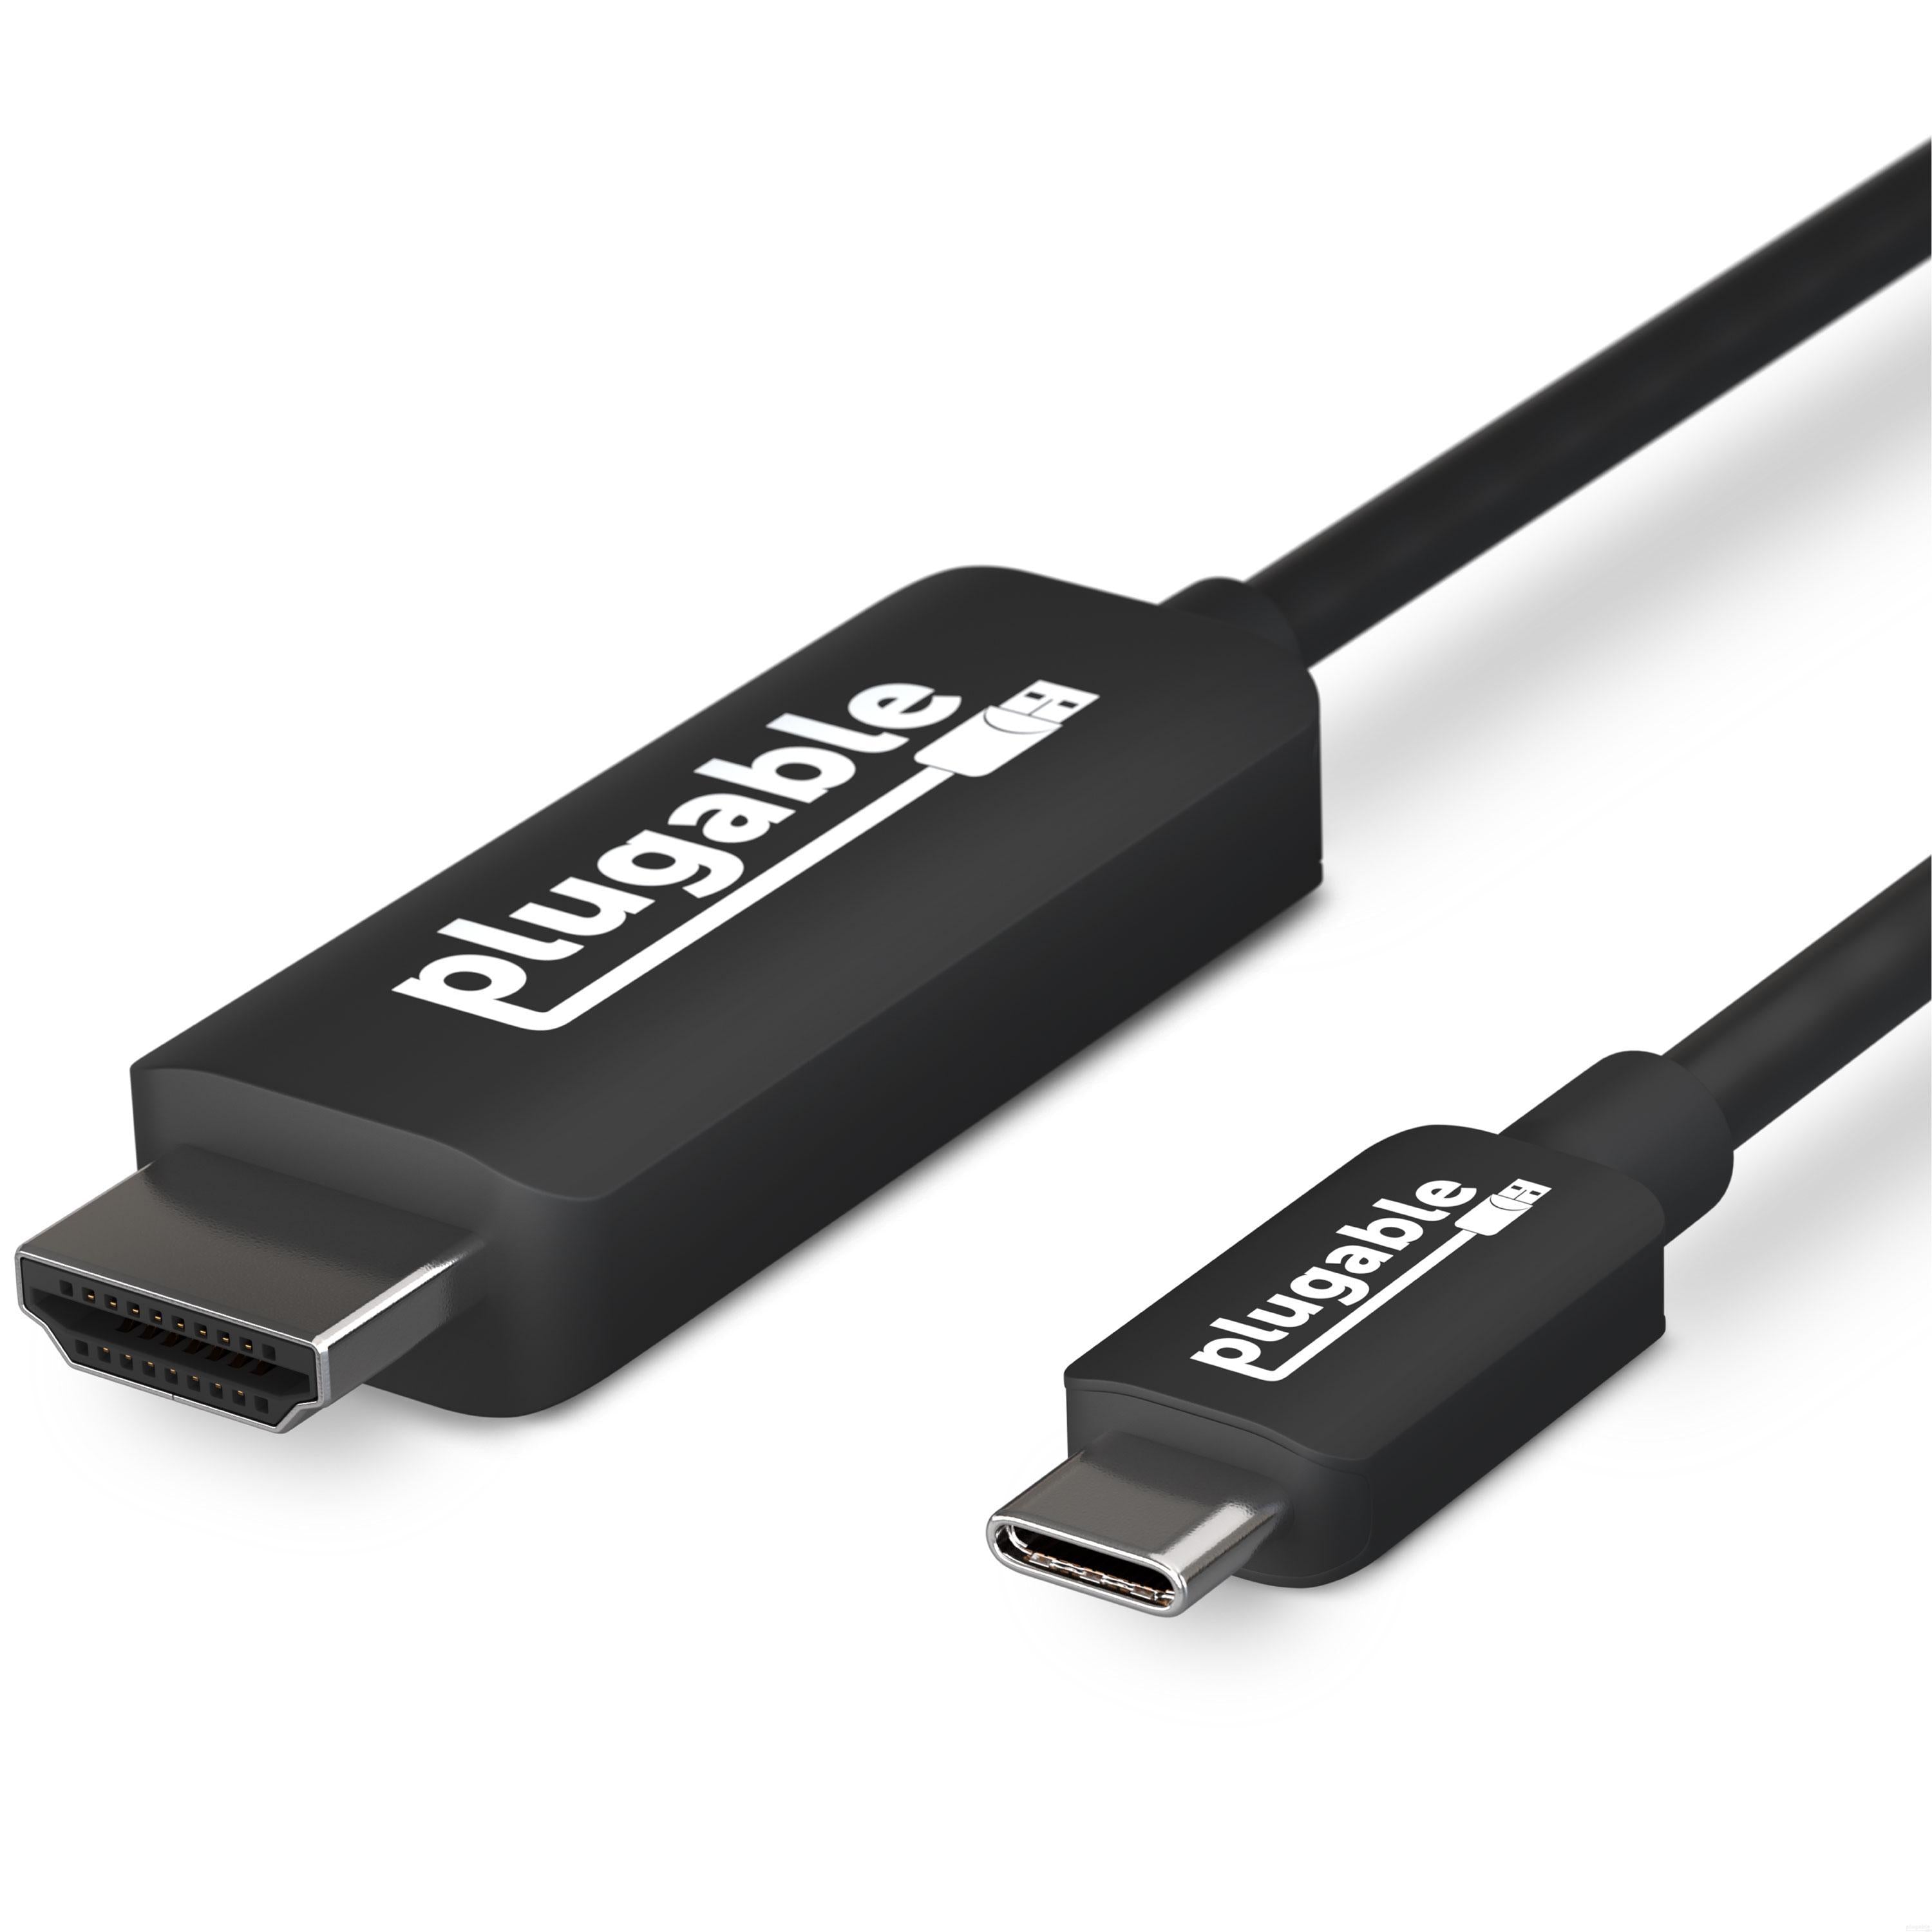 Plugable USB 3.1 to HDMI 2.0 Cable – Plugable